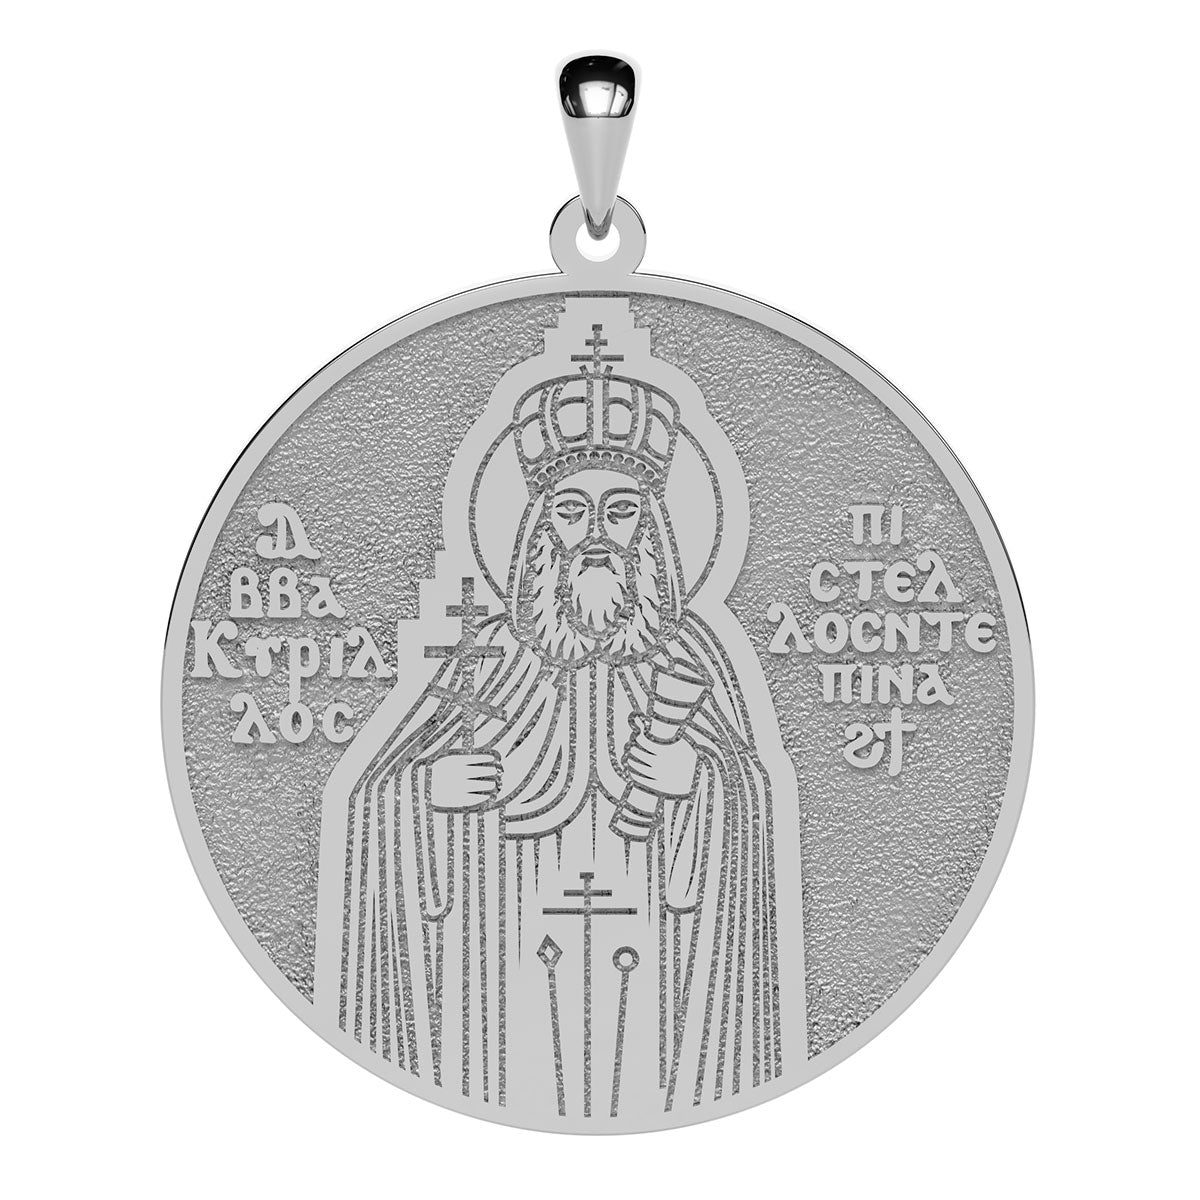 Saint Cyril of Alexandria Coptic Orthodox Icon Round Medal